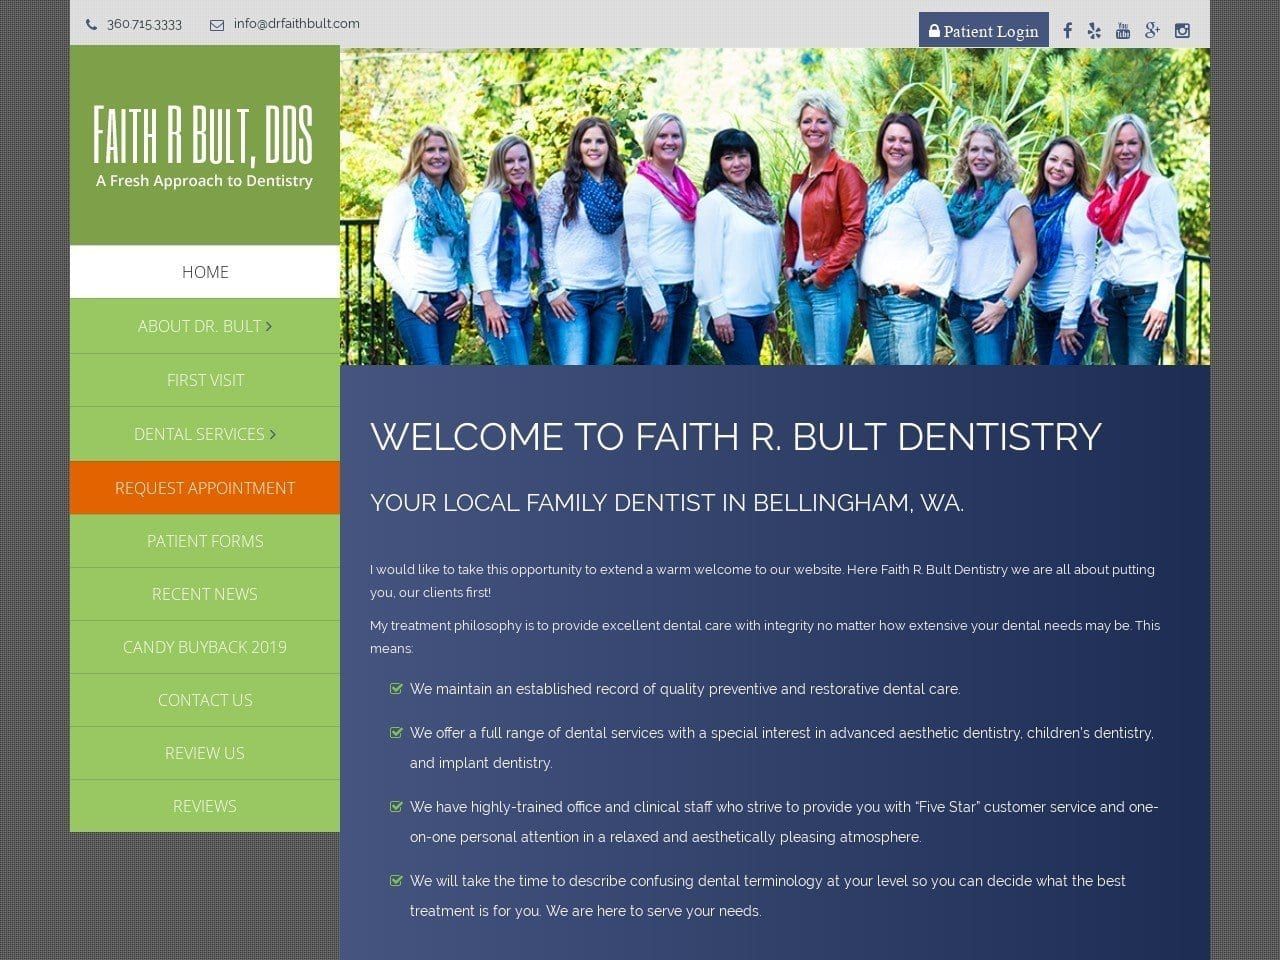 Faith R Bult DDS Website Screenshot from drfaithbult.com